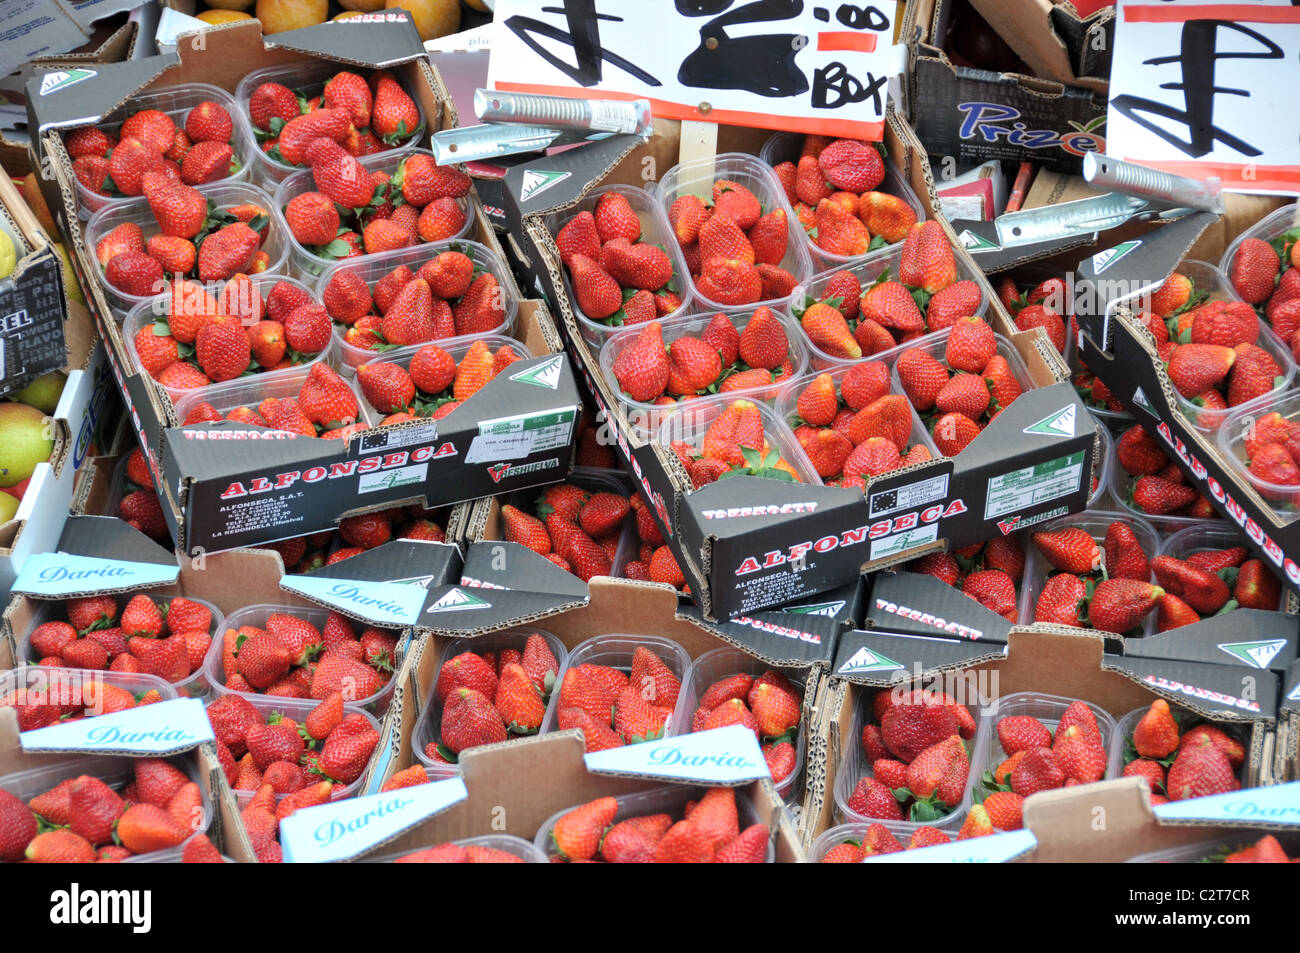 English summer strawberries strawberry punnett fruits fruit market stall Stock Photo